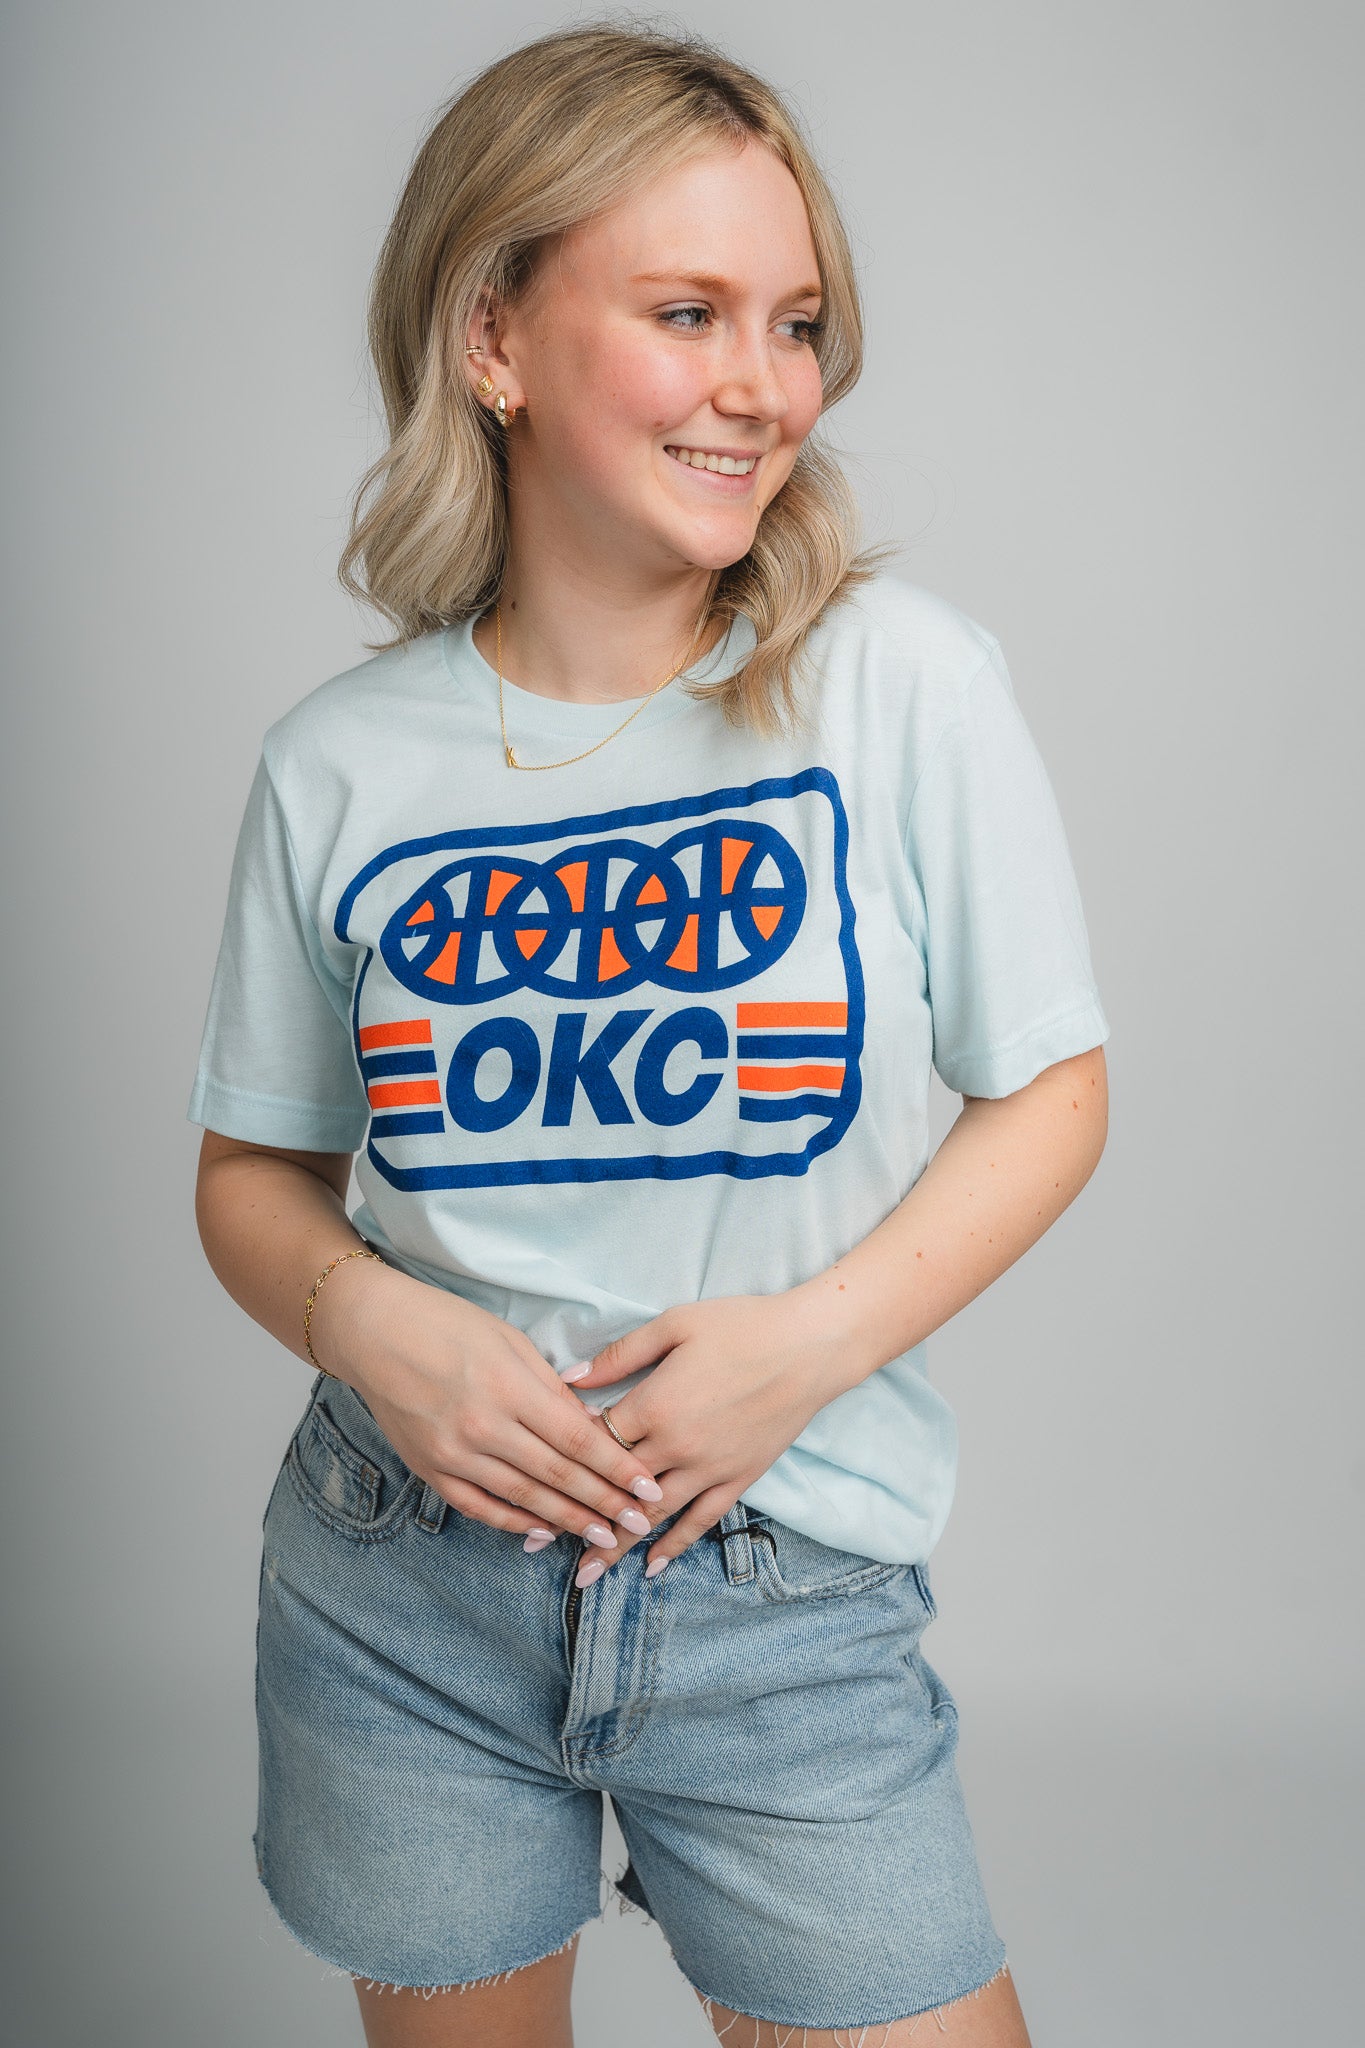 OKC basketball lines unisex t-shirt - Trendy Oklahoma City Basketball T-Shirts Lush Fashion Lounge Boutique in Oklahoma City